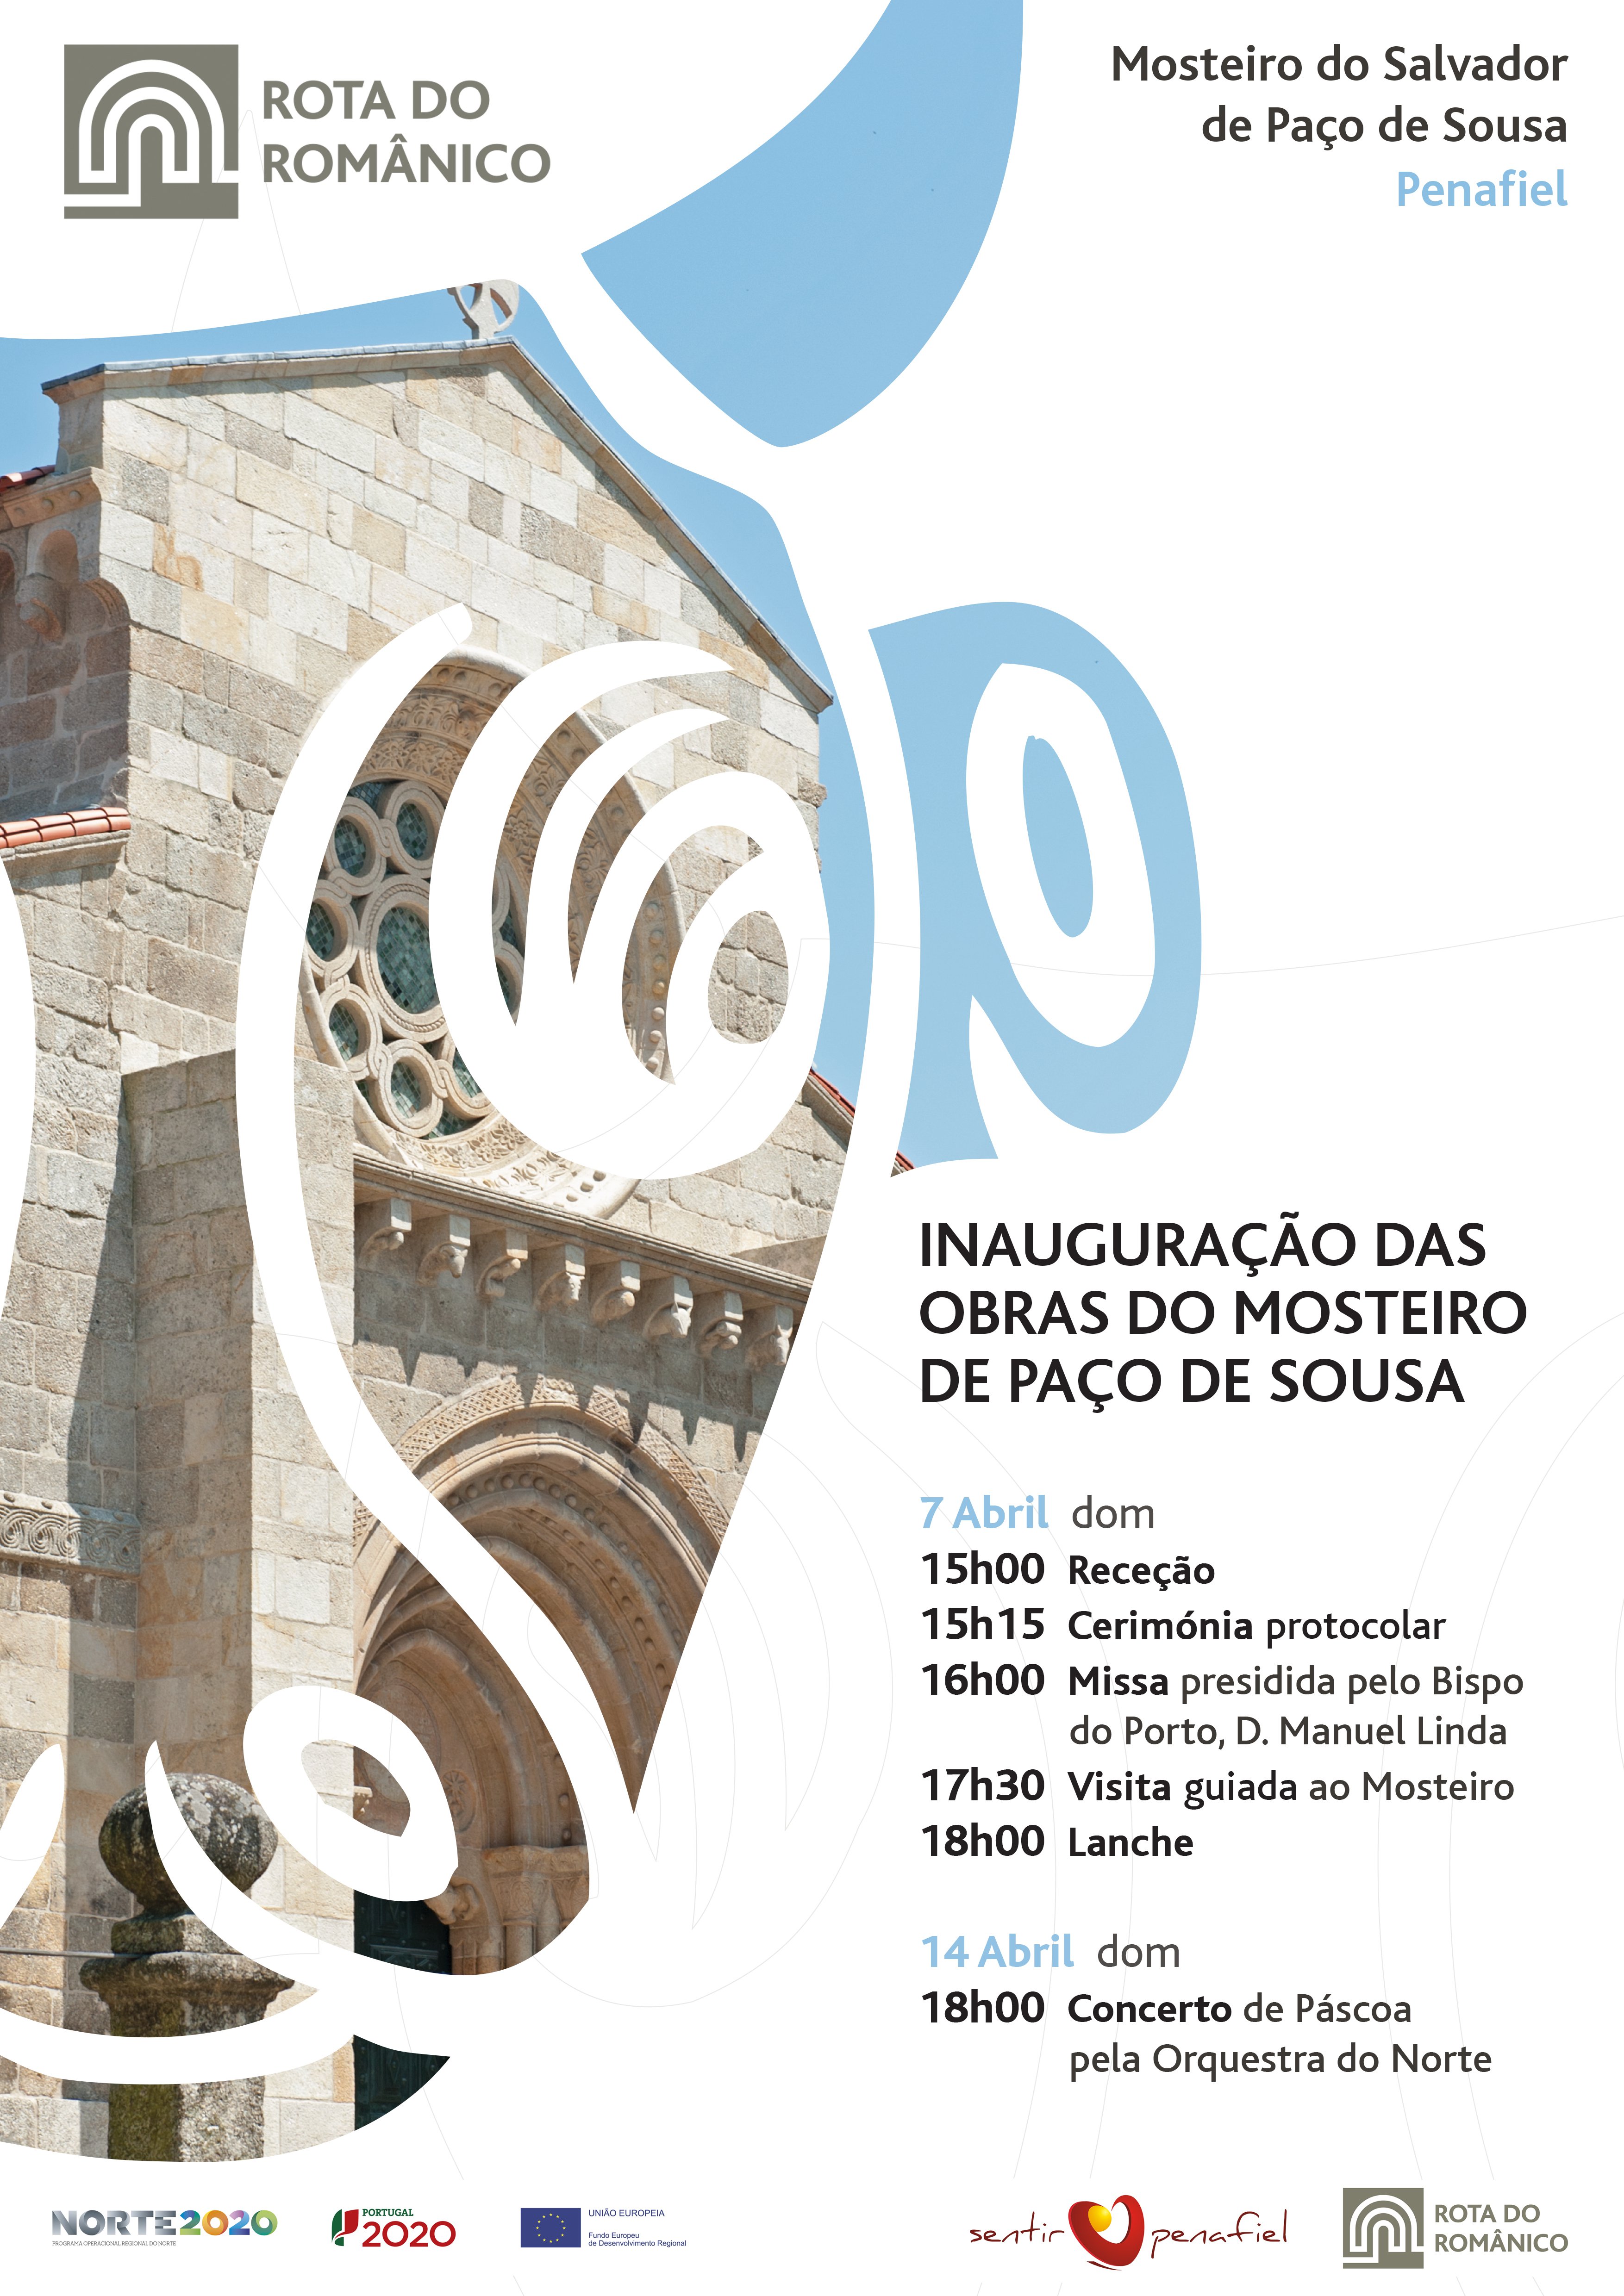 Monasterio de Paço de Sousa: Conclusión de las Obras